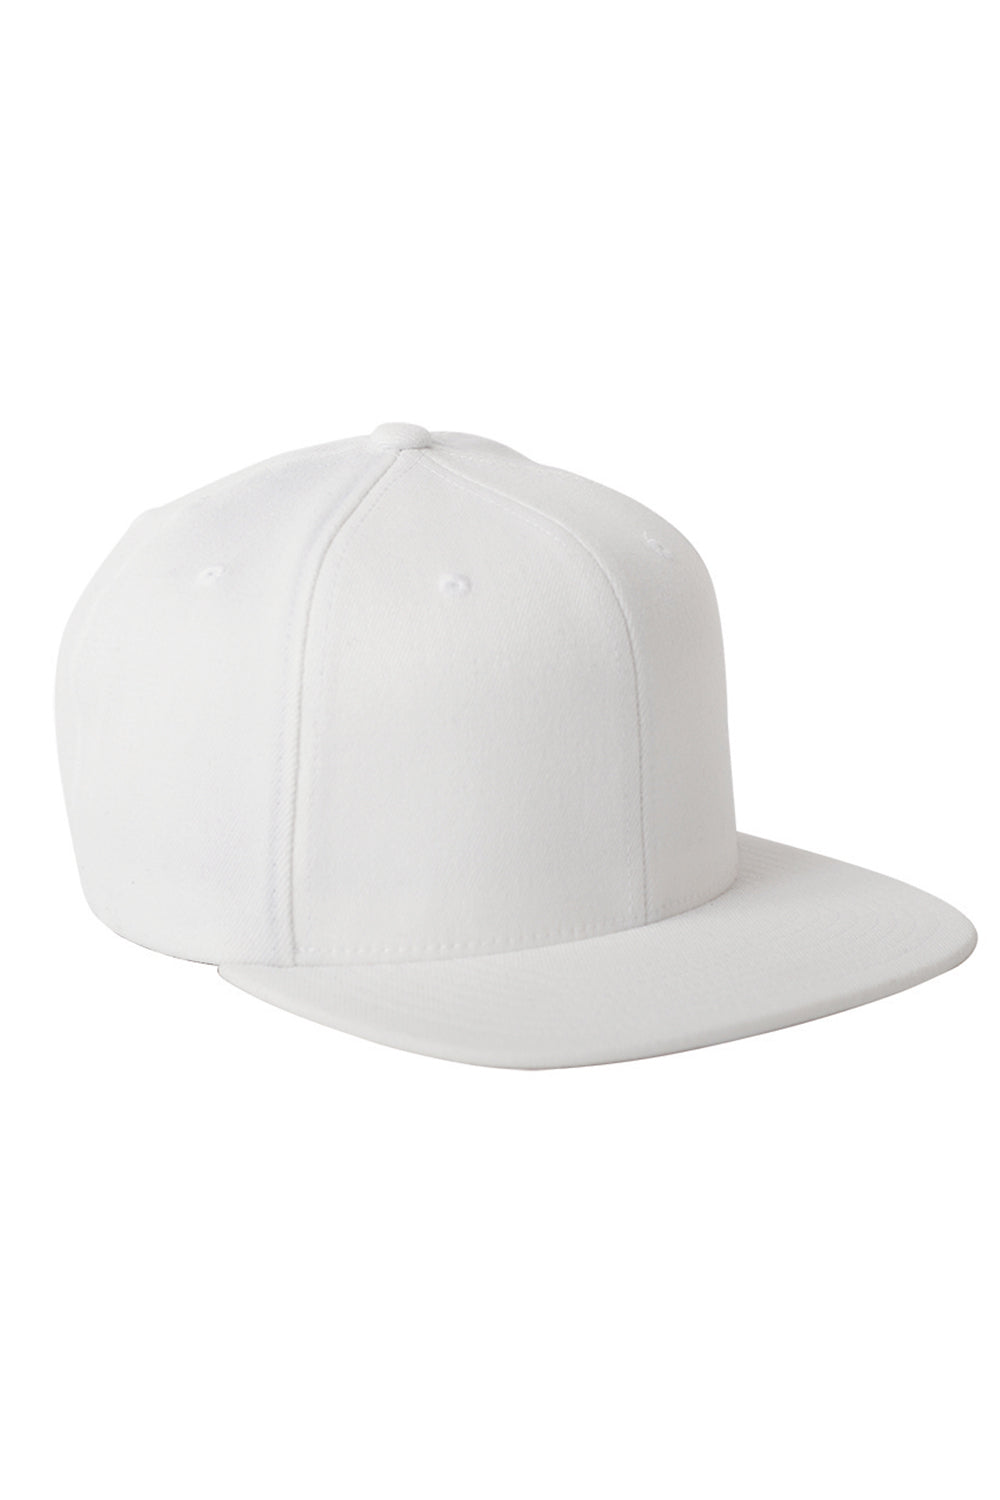 Flexfit 110F Mens Adjustable Hat White Front